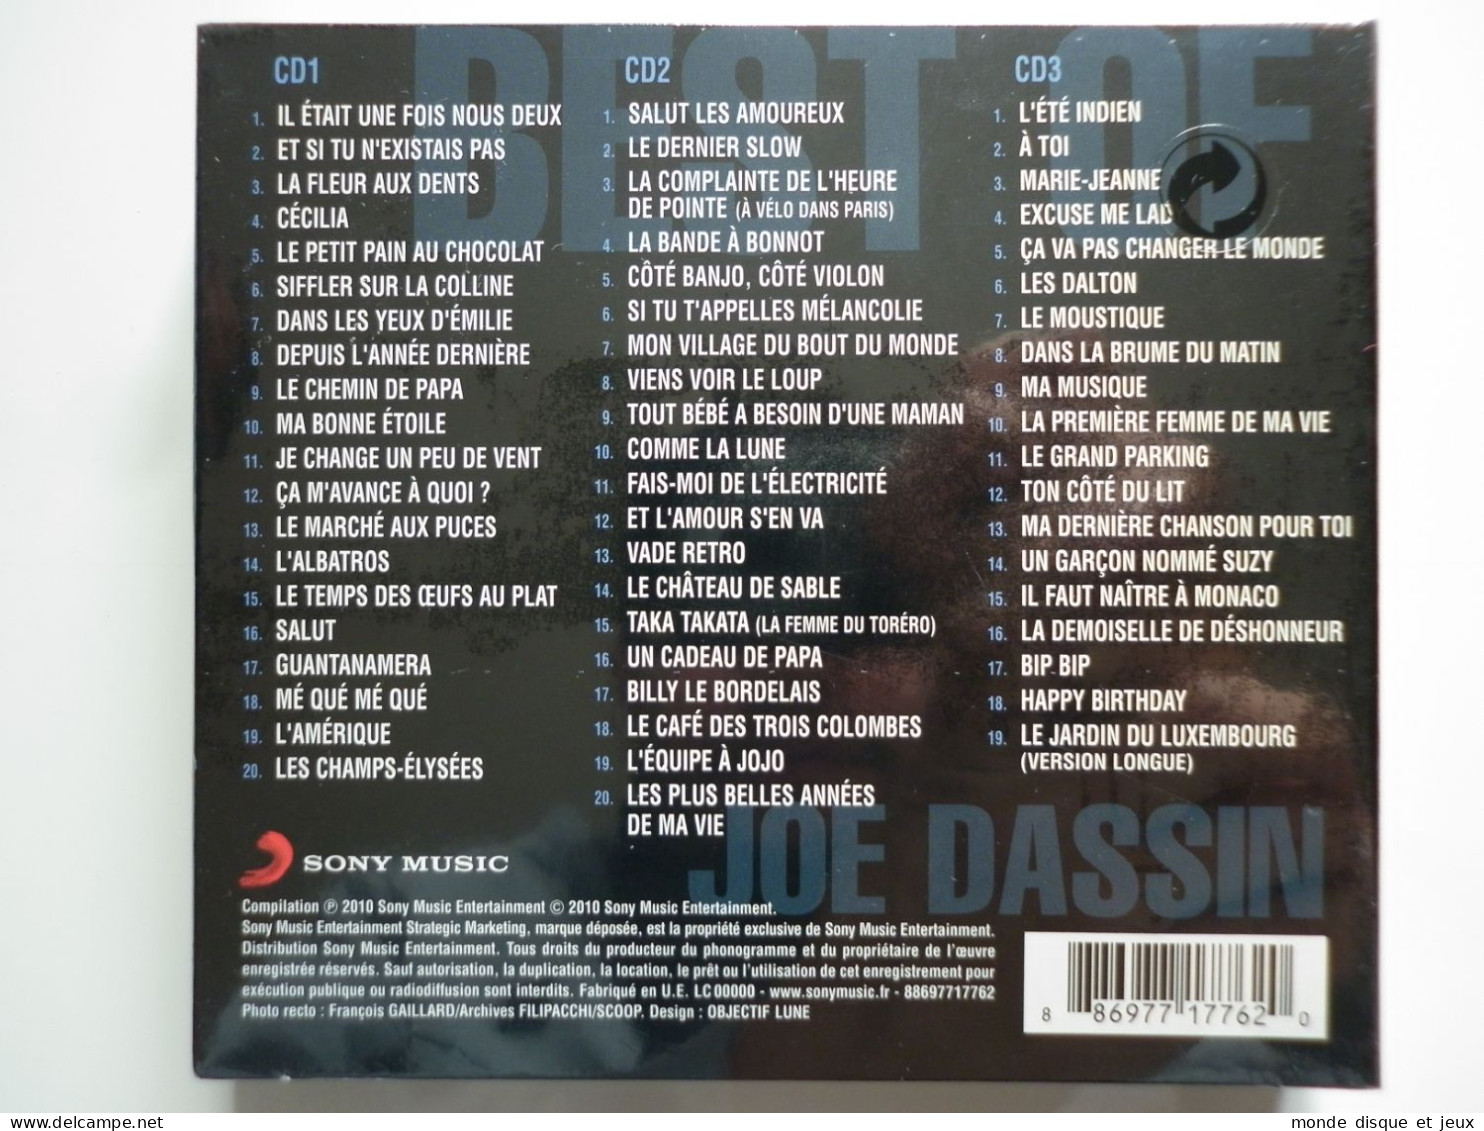 Joe Dassin Triple Cd Album Digipack L'Album Souvenir - Sonstige - Franz. Chansons